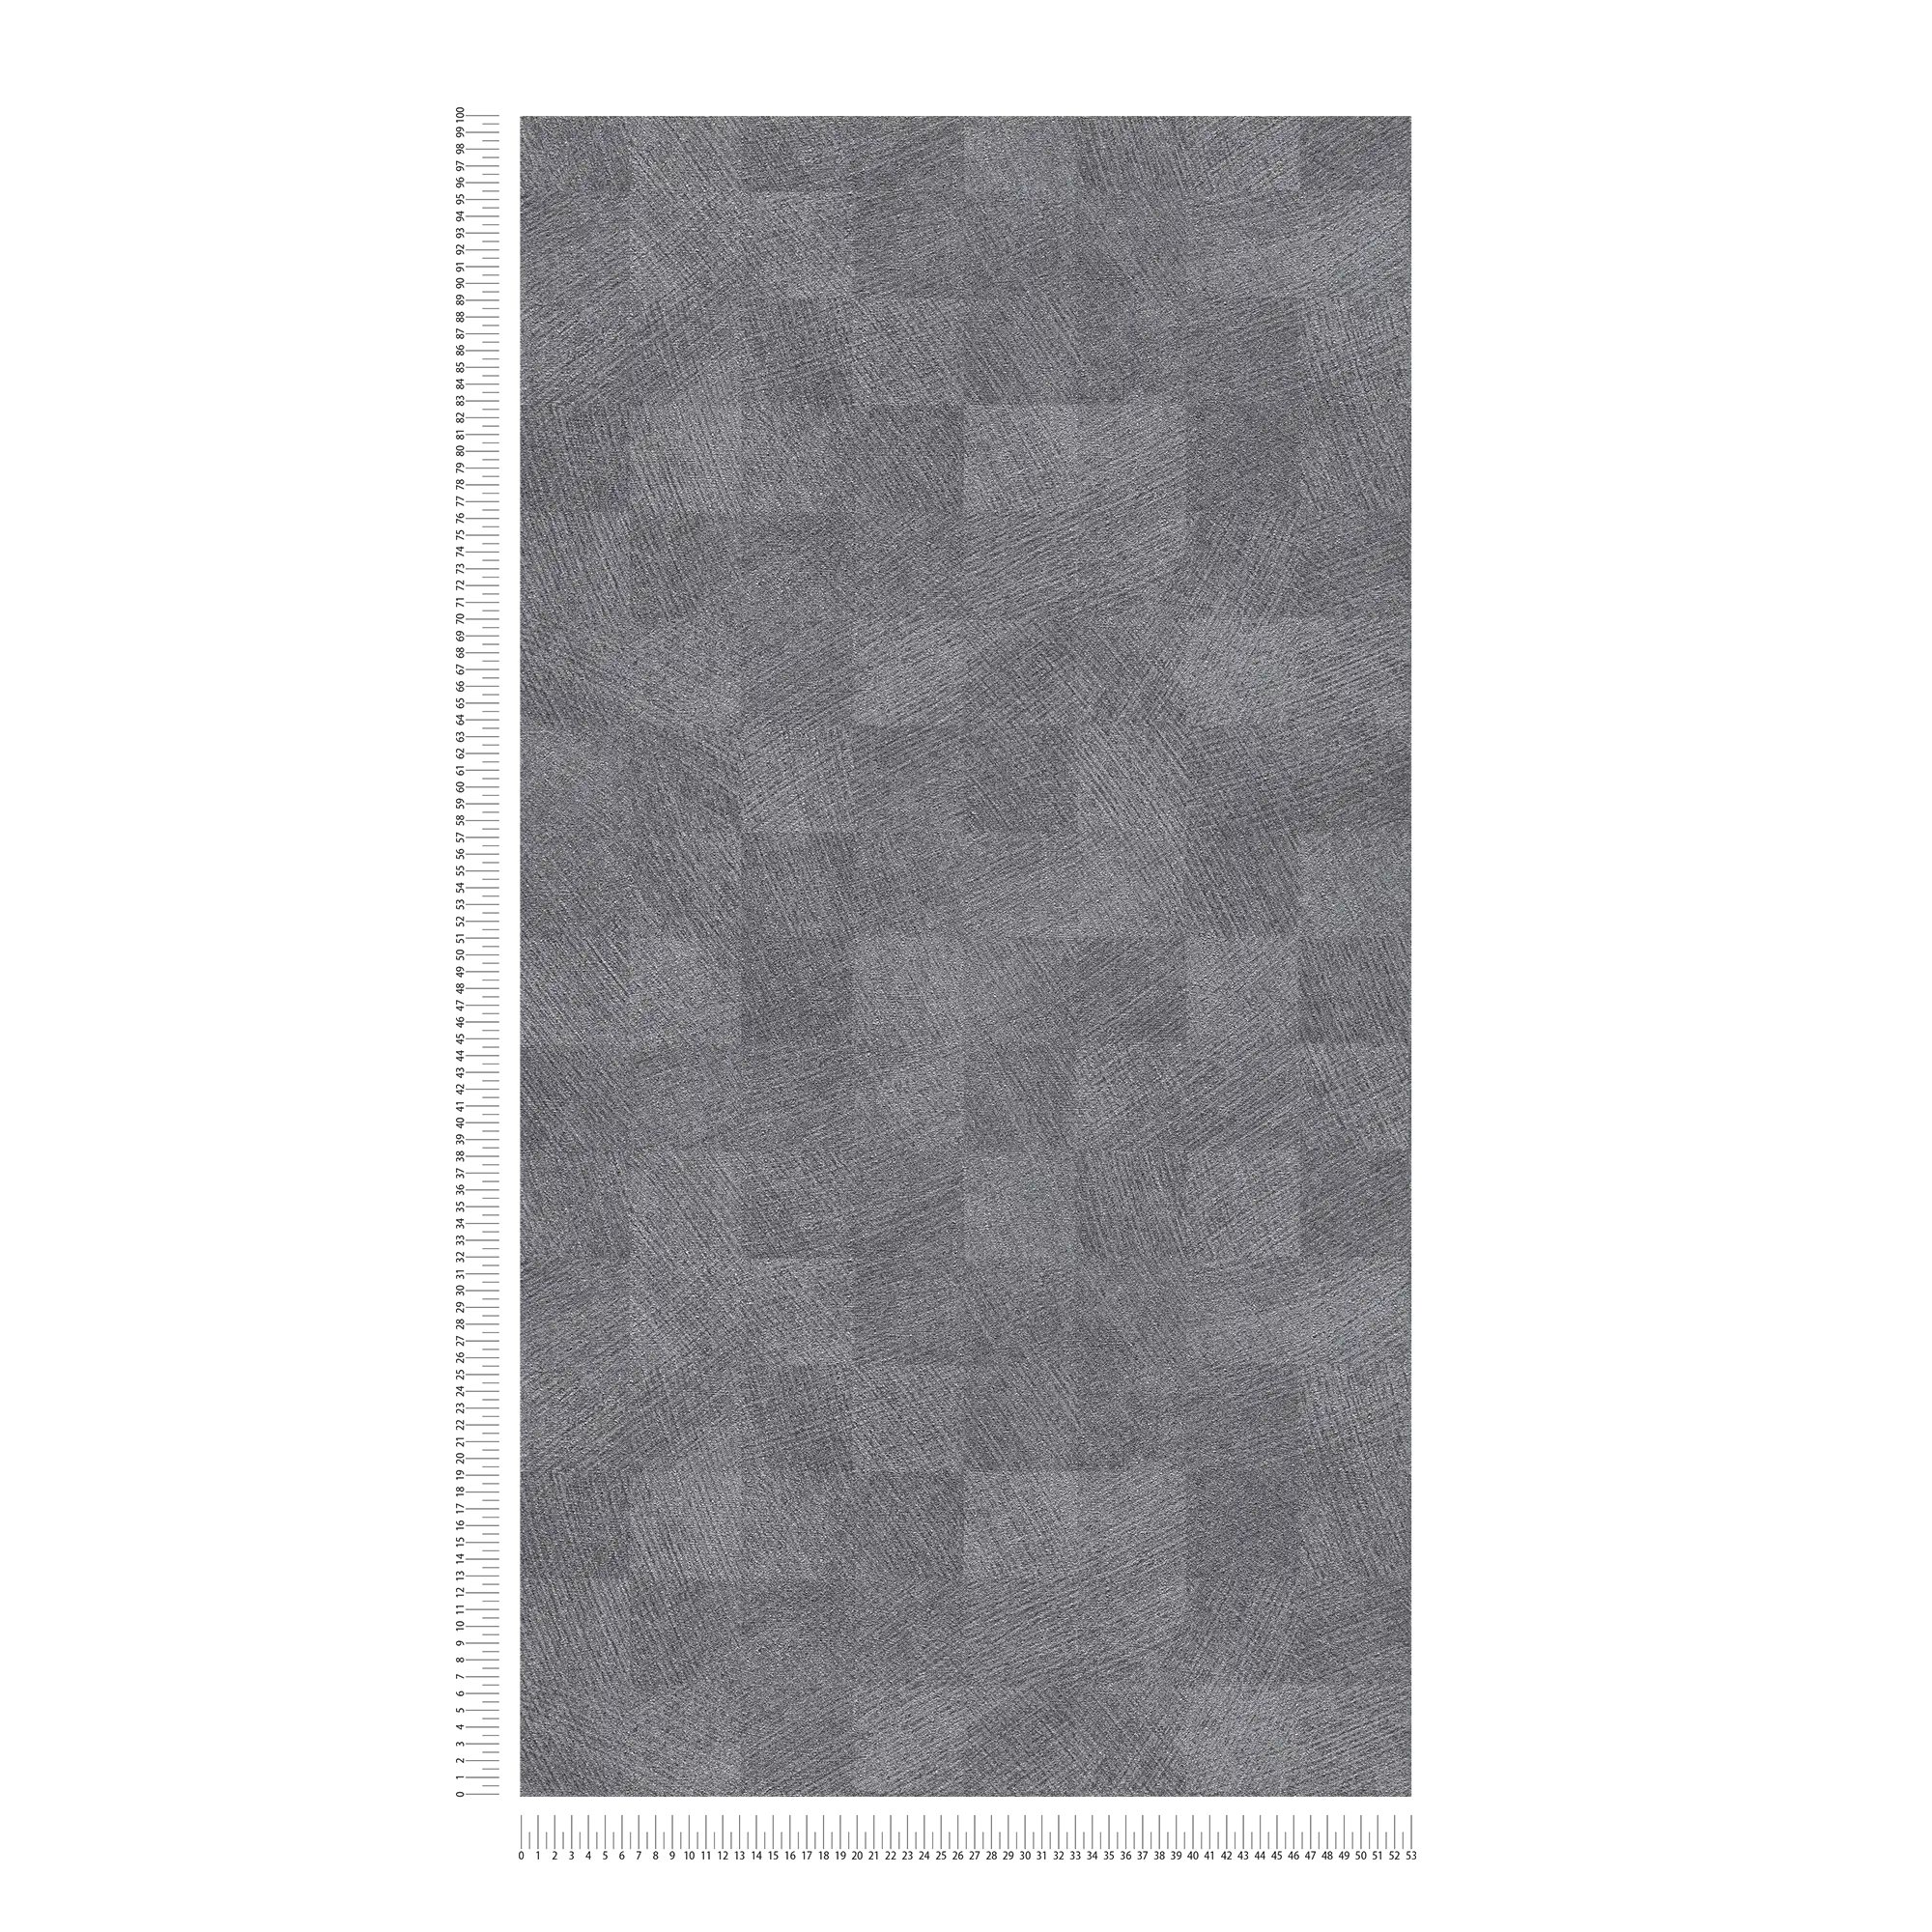             Metallic wallpaper dark grey check pattern with gloss effect - grey, metallic
        